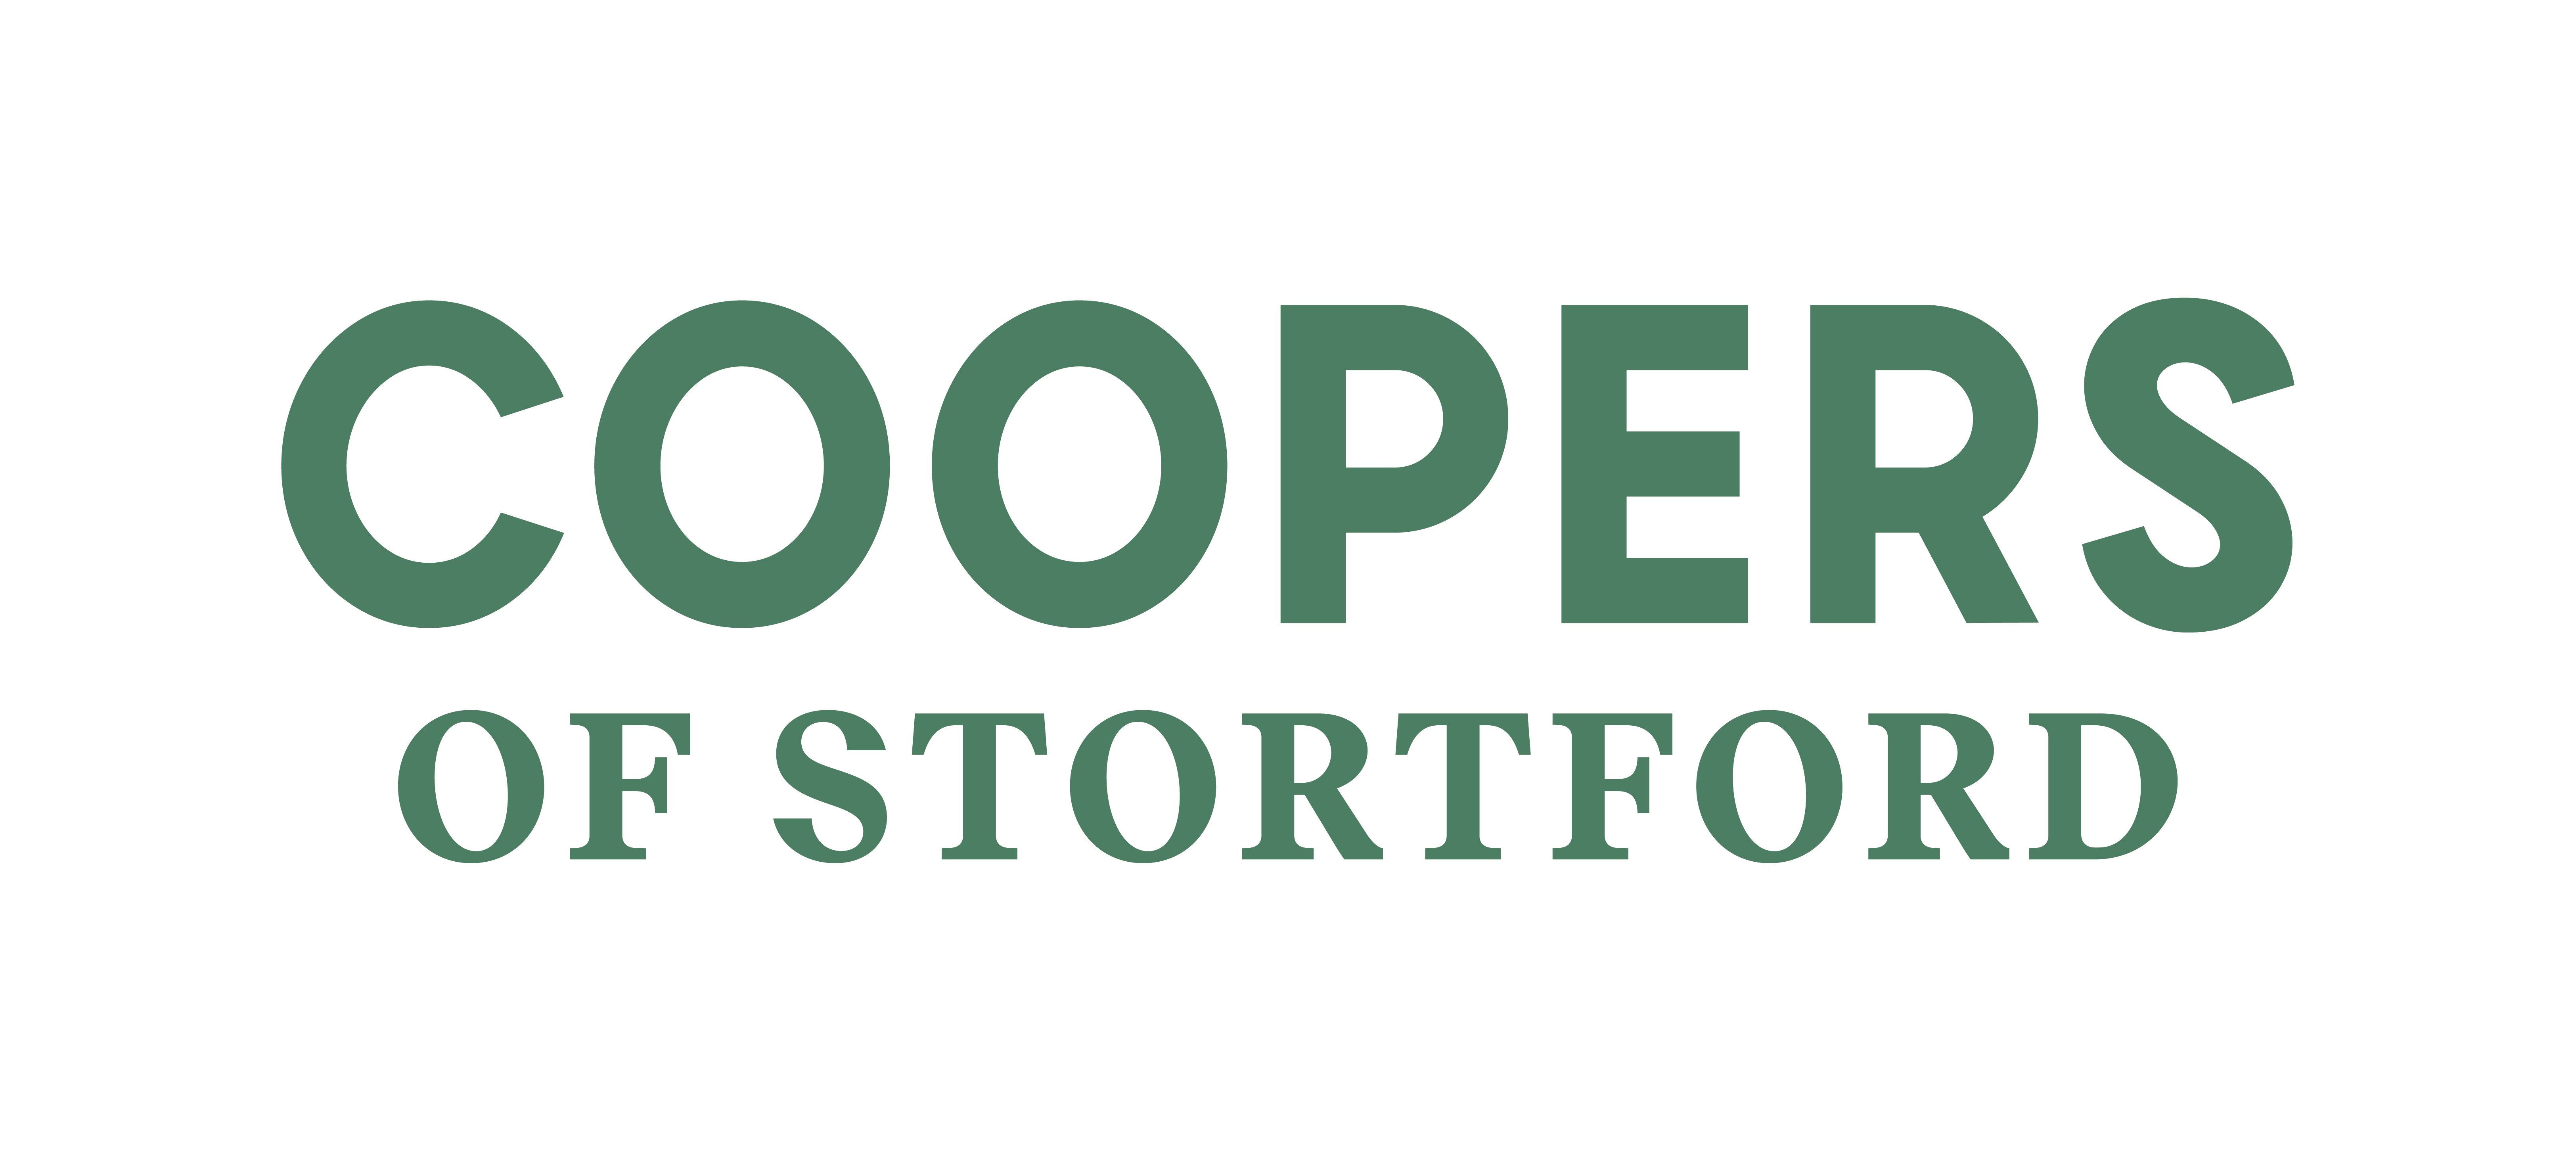 Coopers_Logotype_Green-CMYK